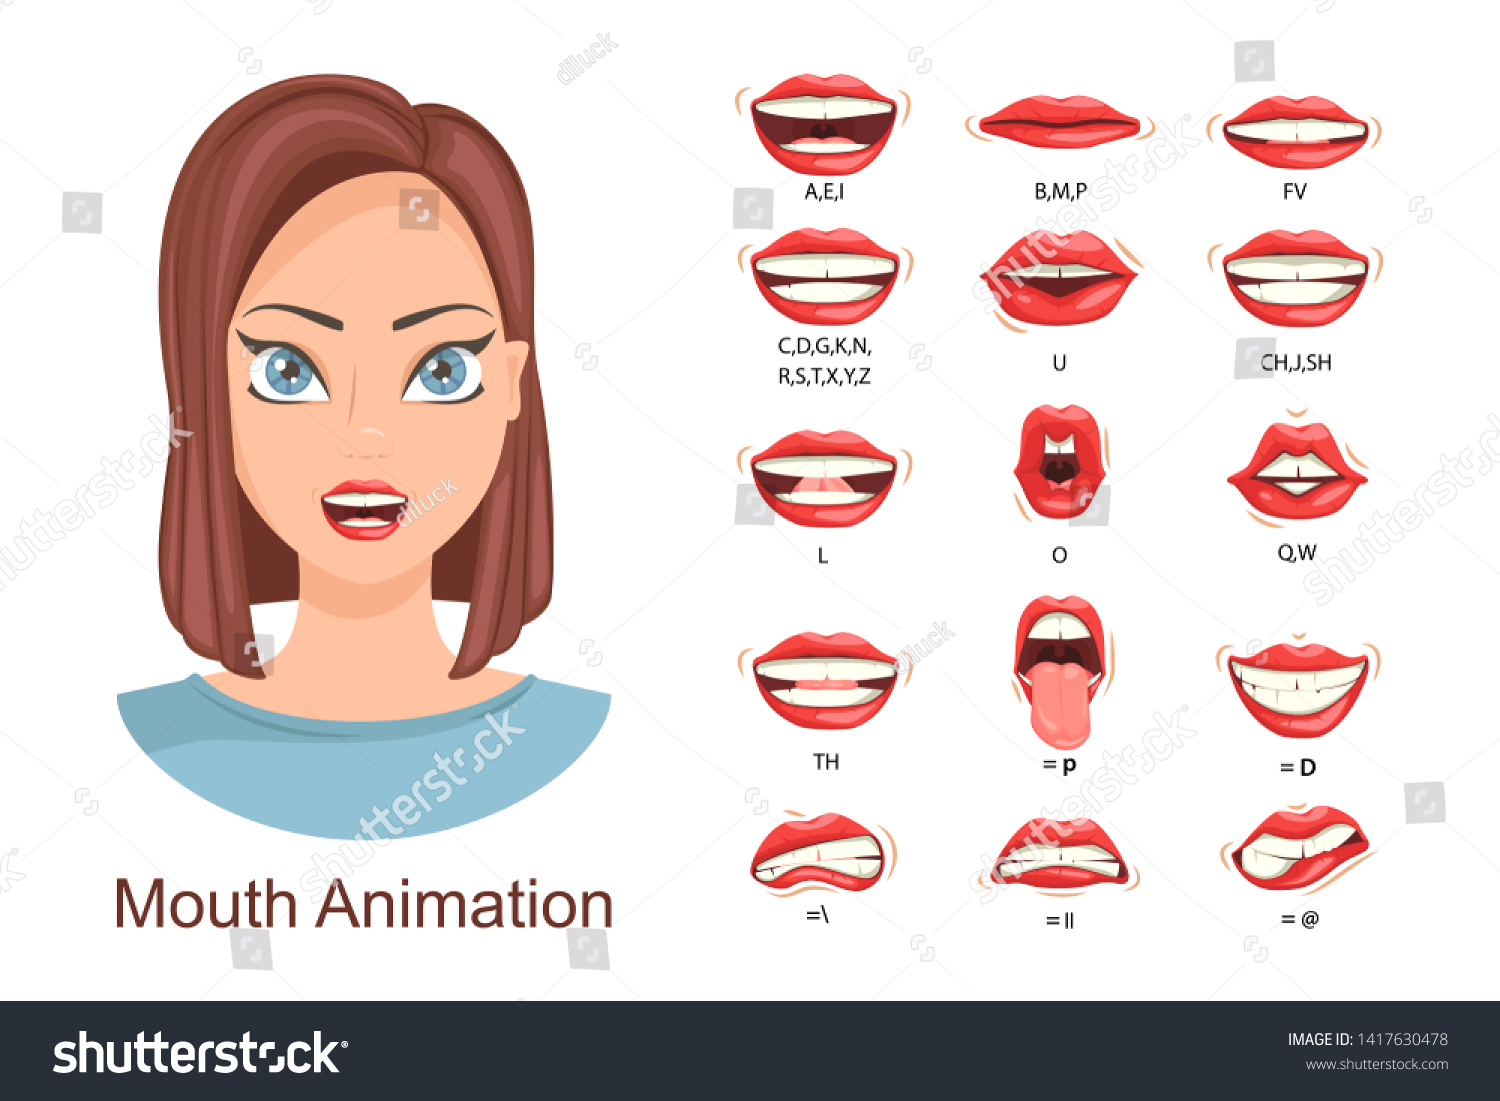 Mouths lip sync Images, Stock Photos & Vectors | Shutterstock